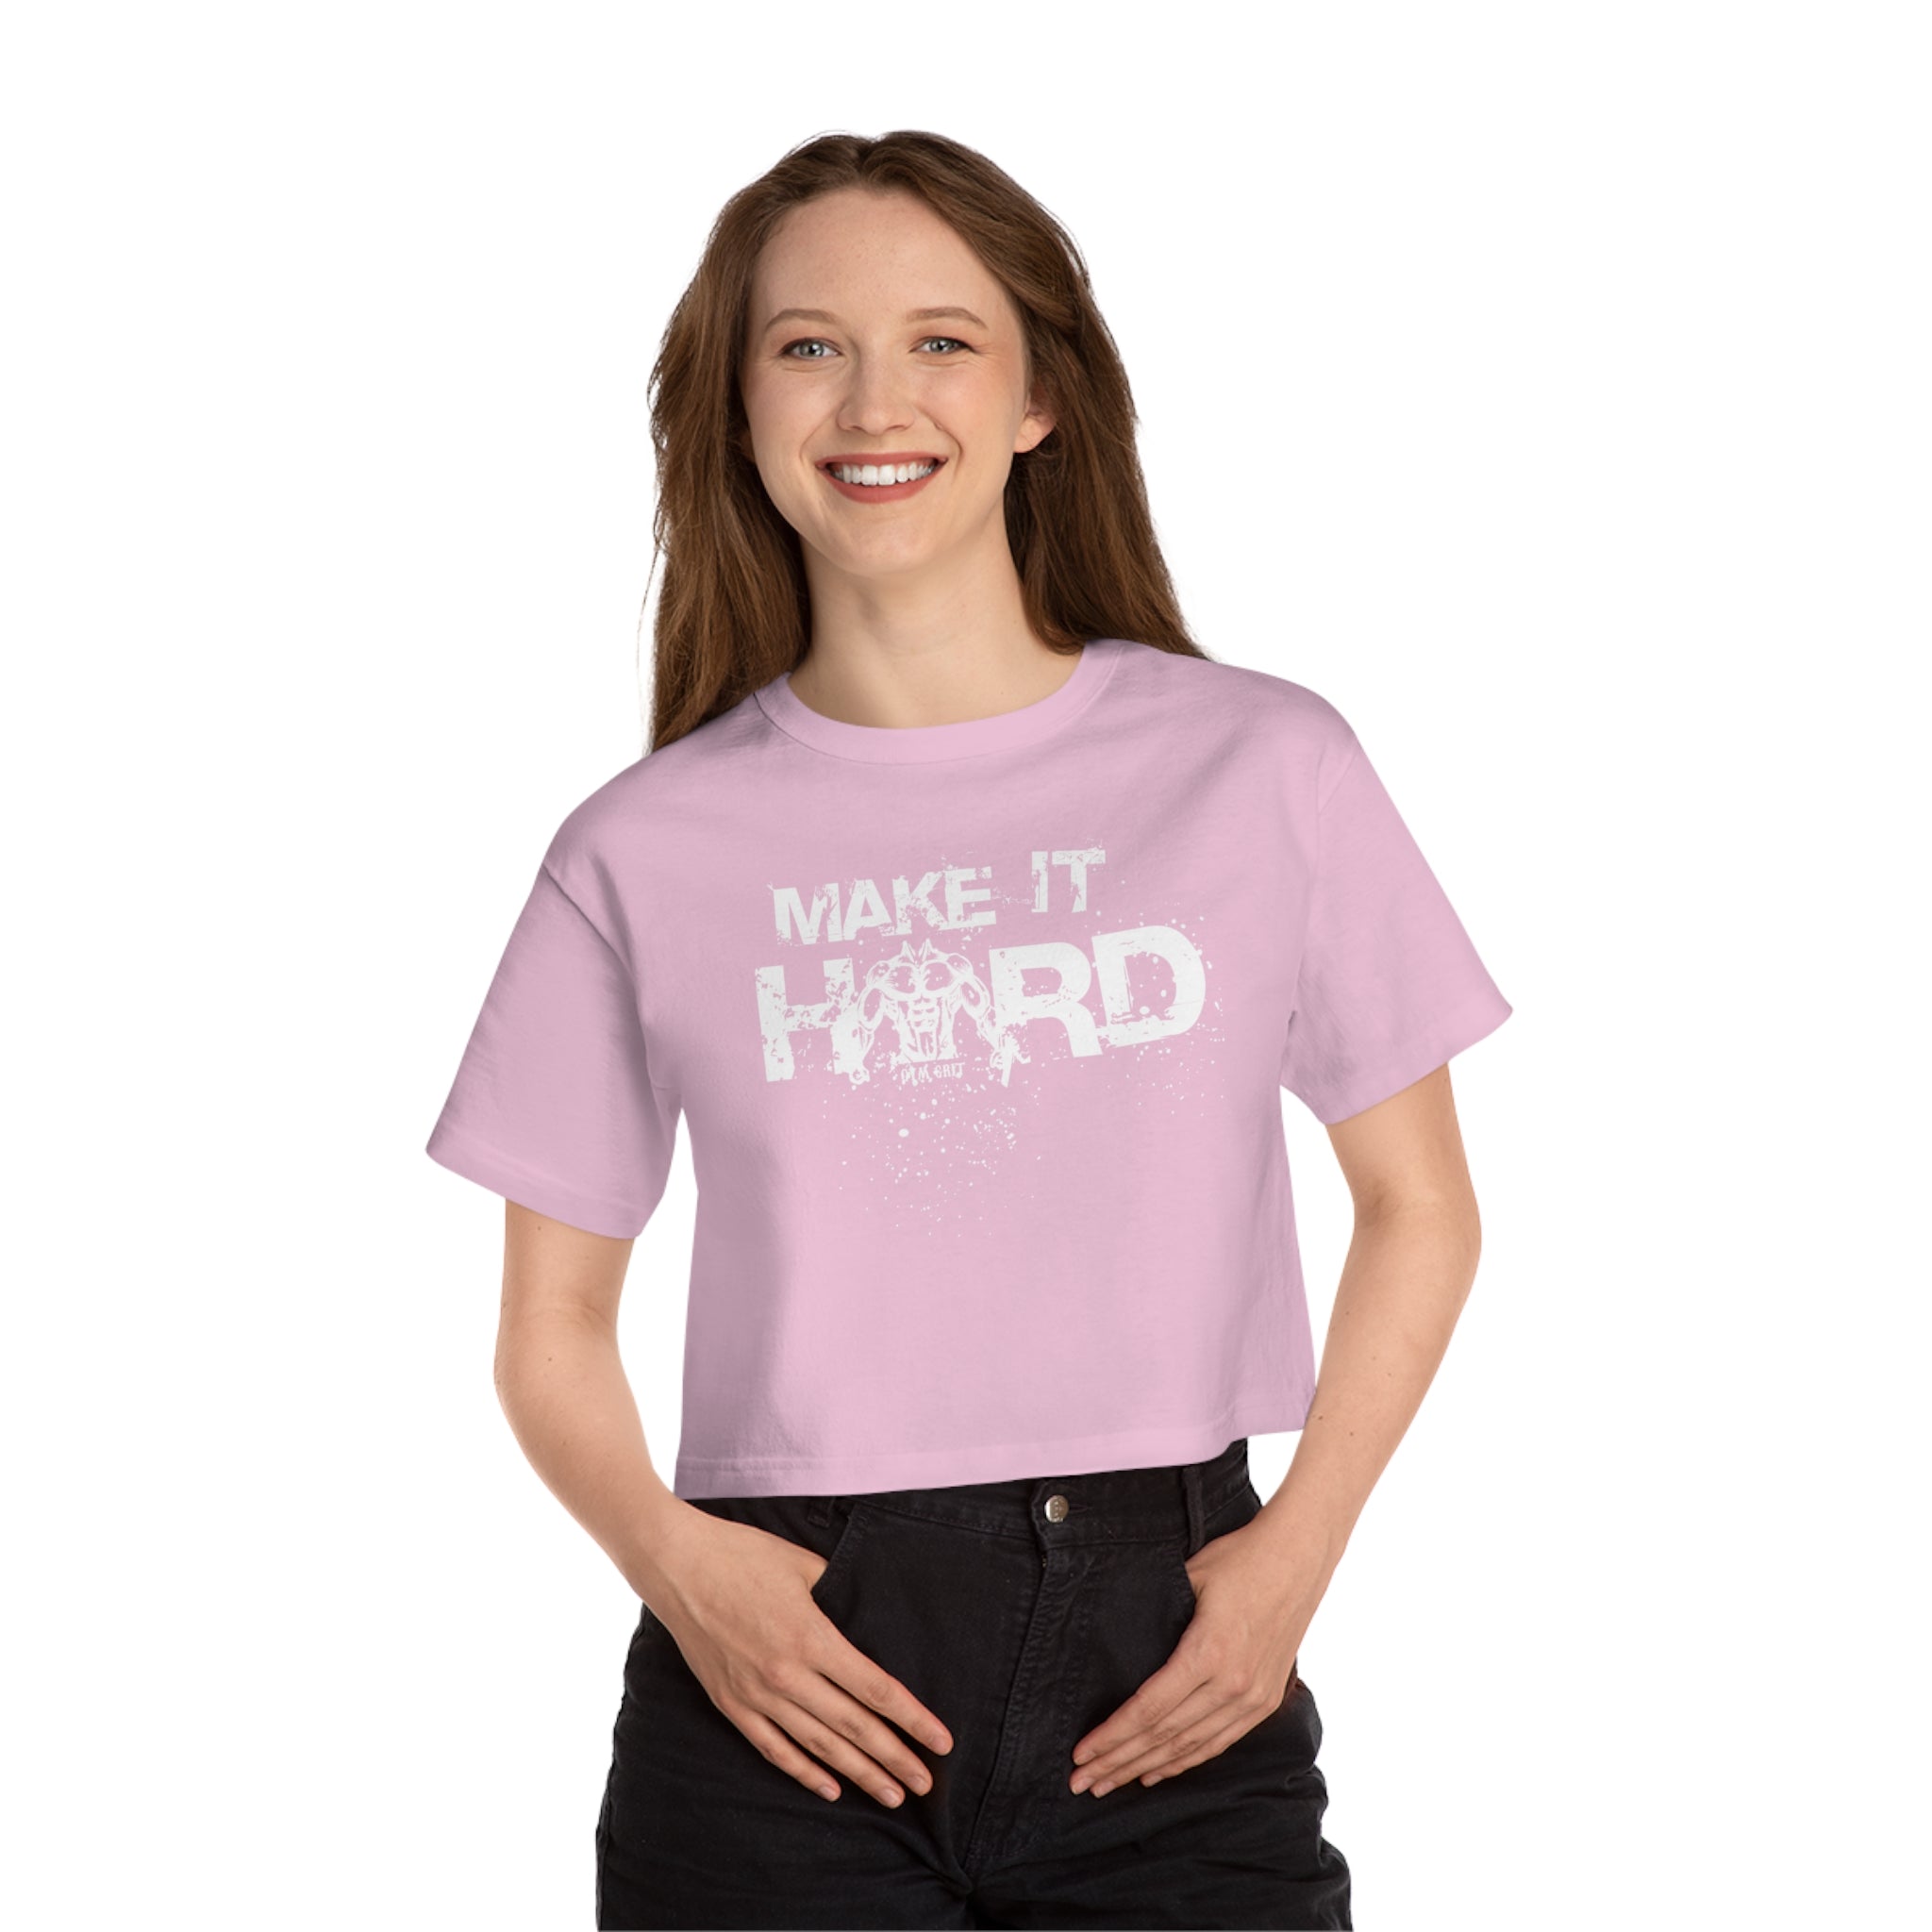 "MAKE IT HARD" Champion Women's Heritage Cropped T-Shirt